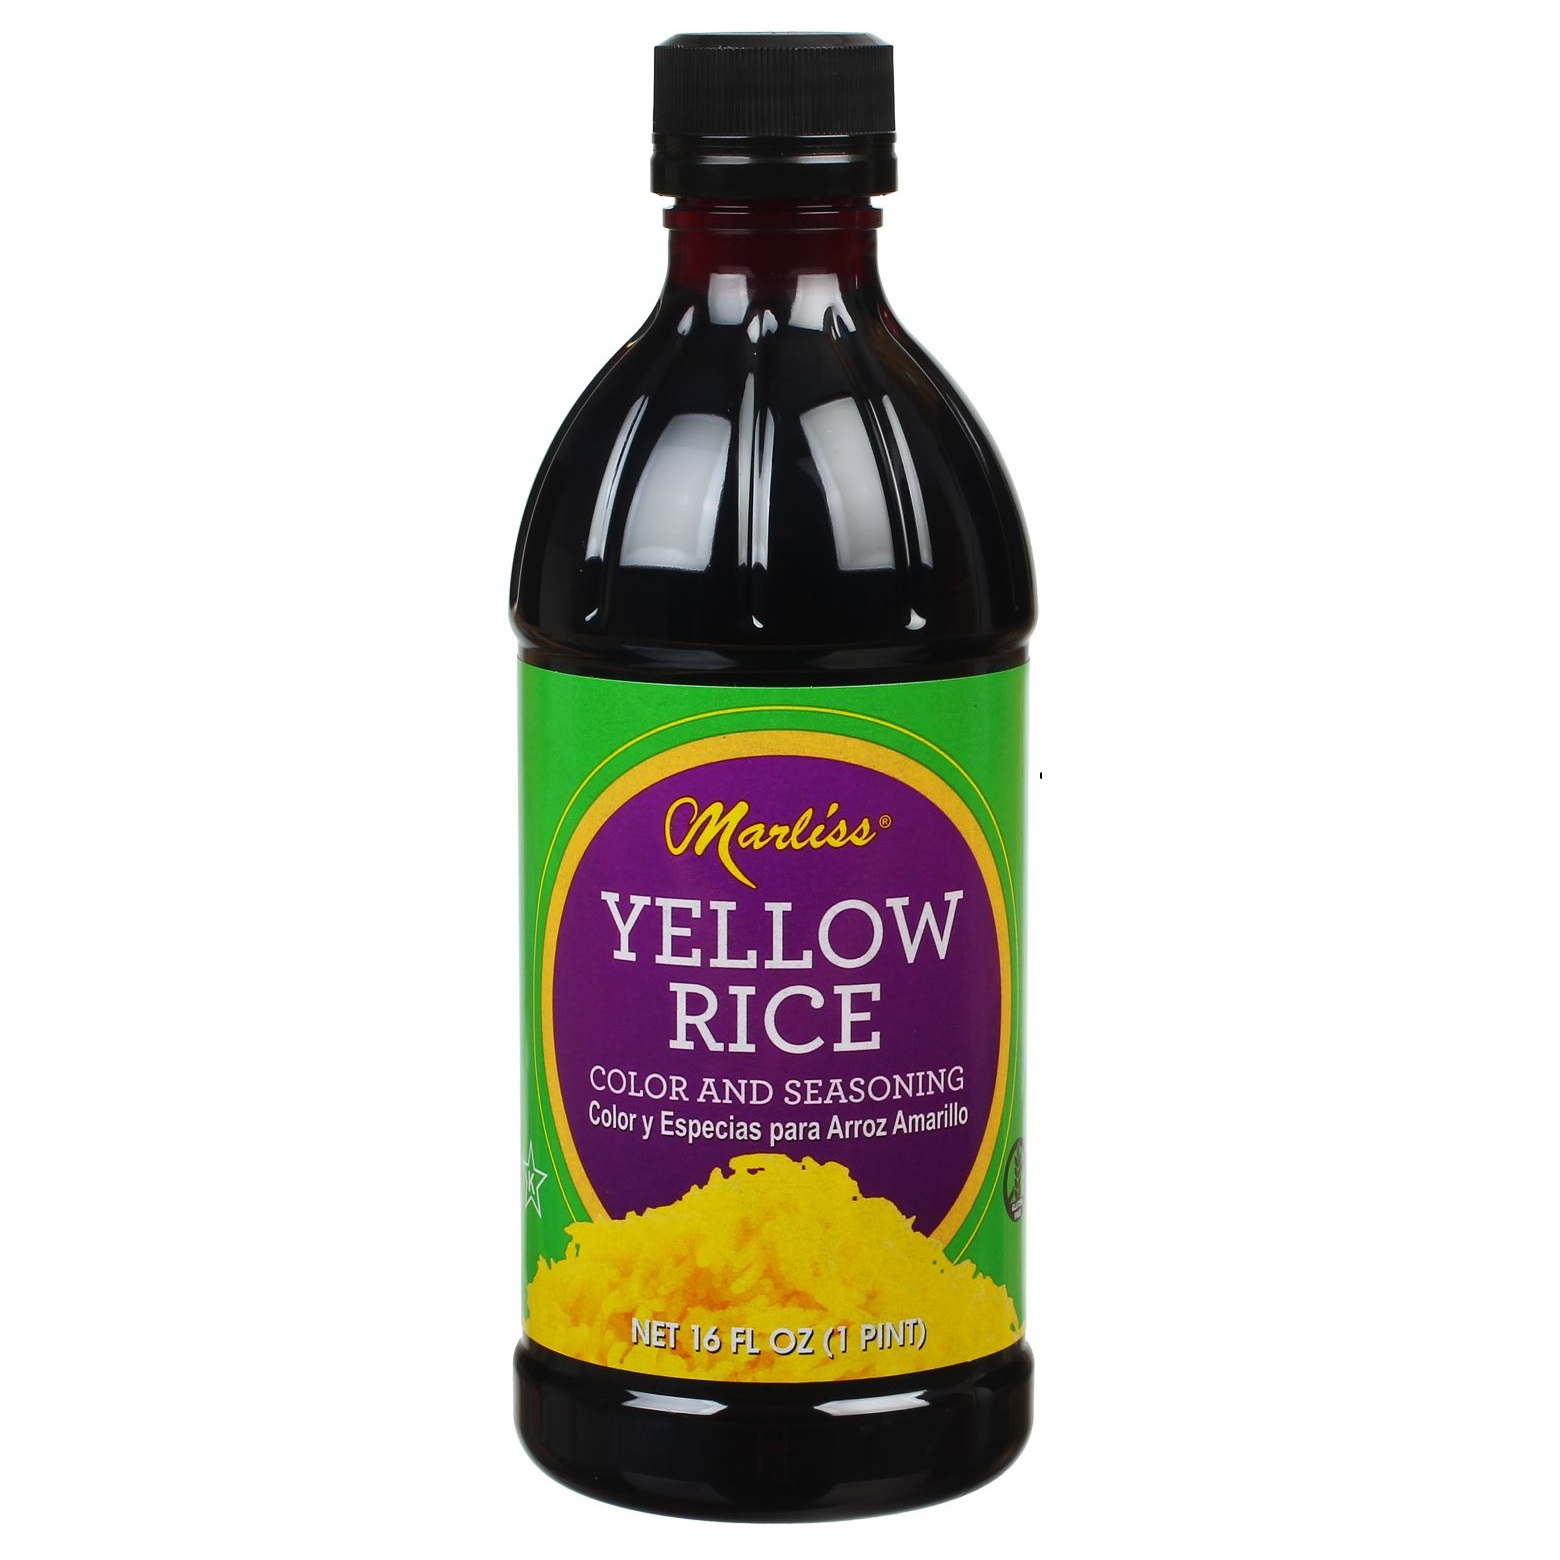 12/16 Flayco Yellow Rice
Color W/ Seasoning